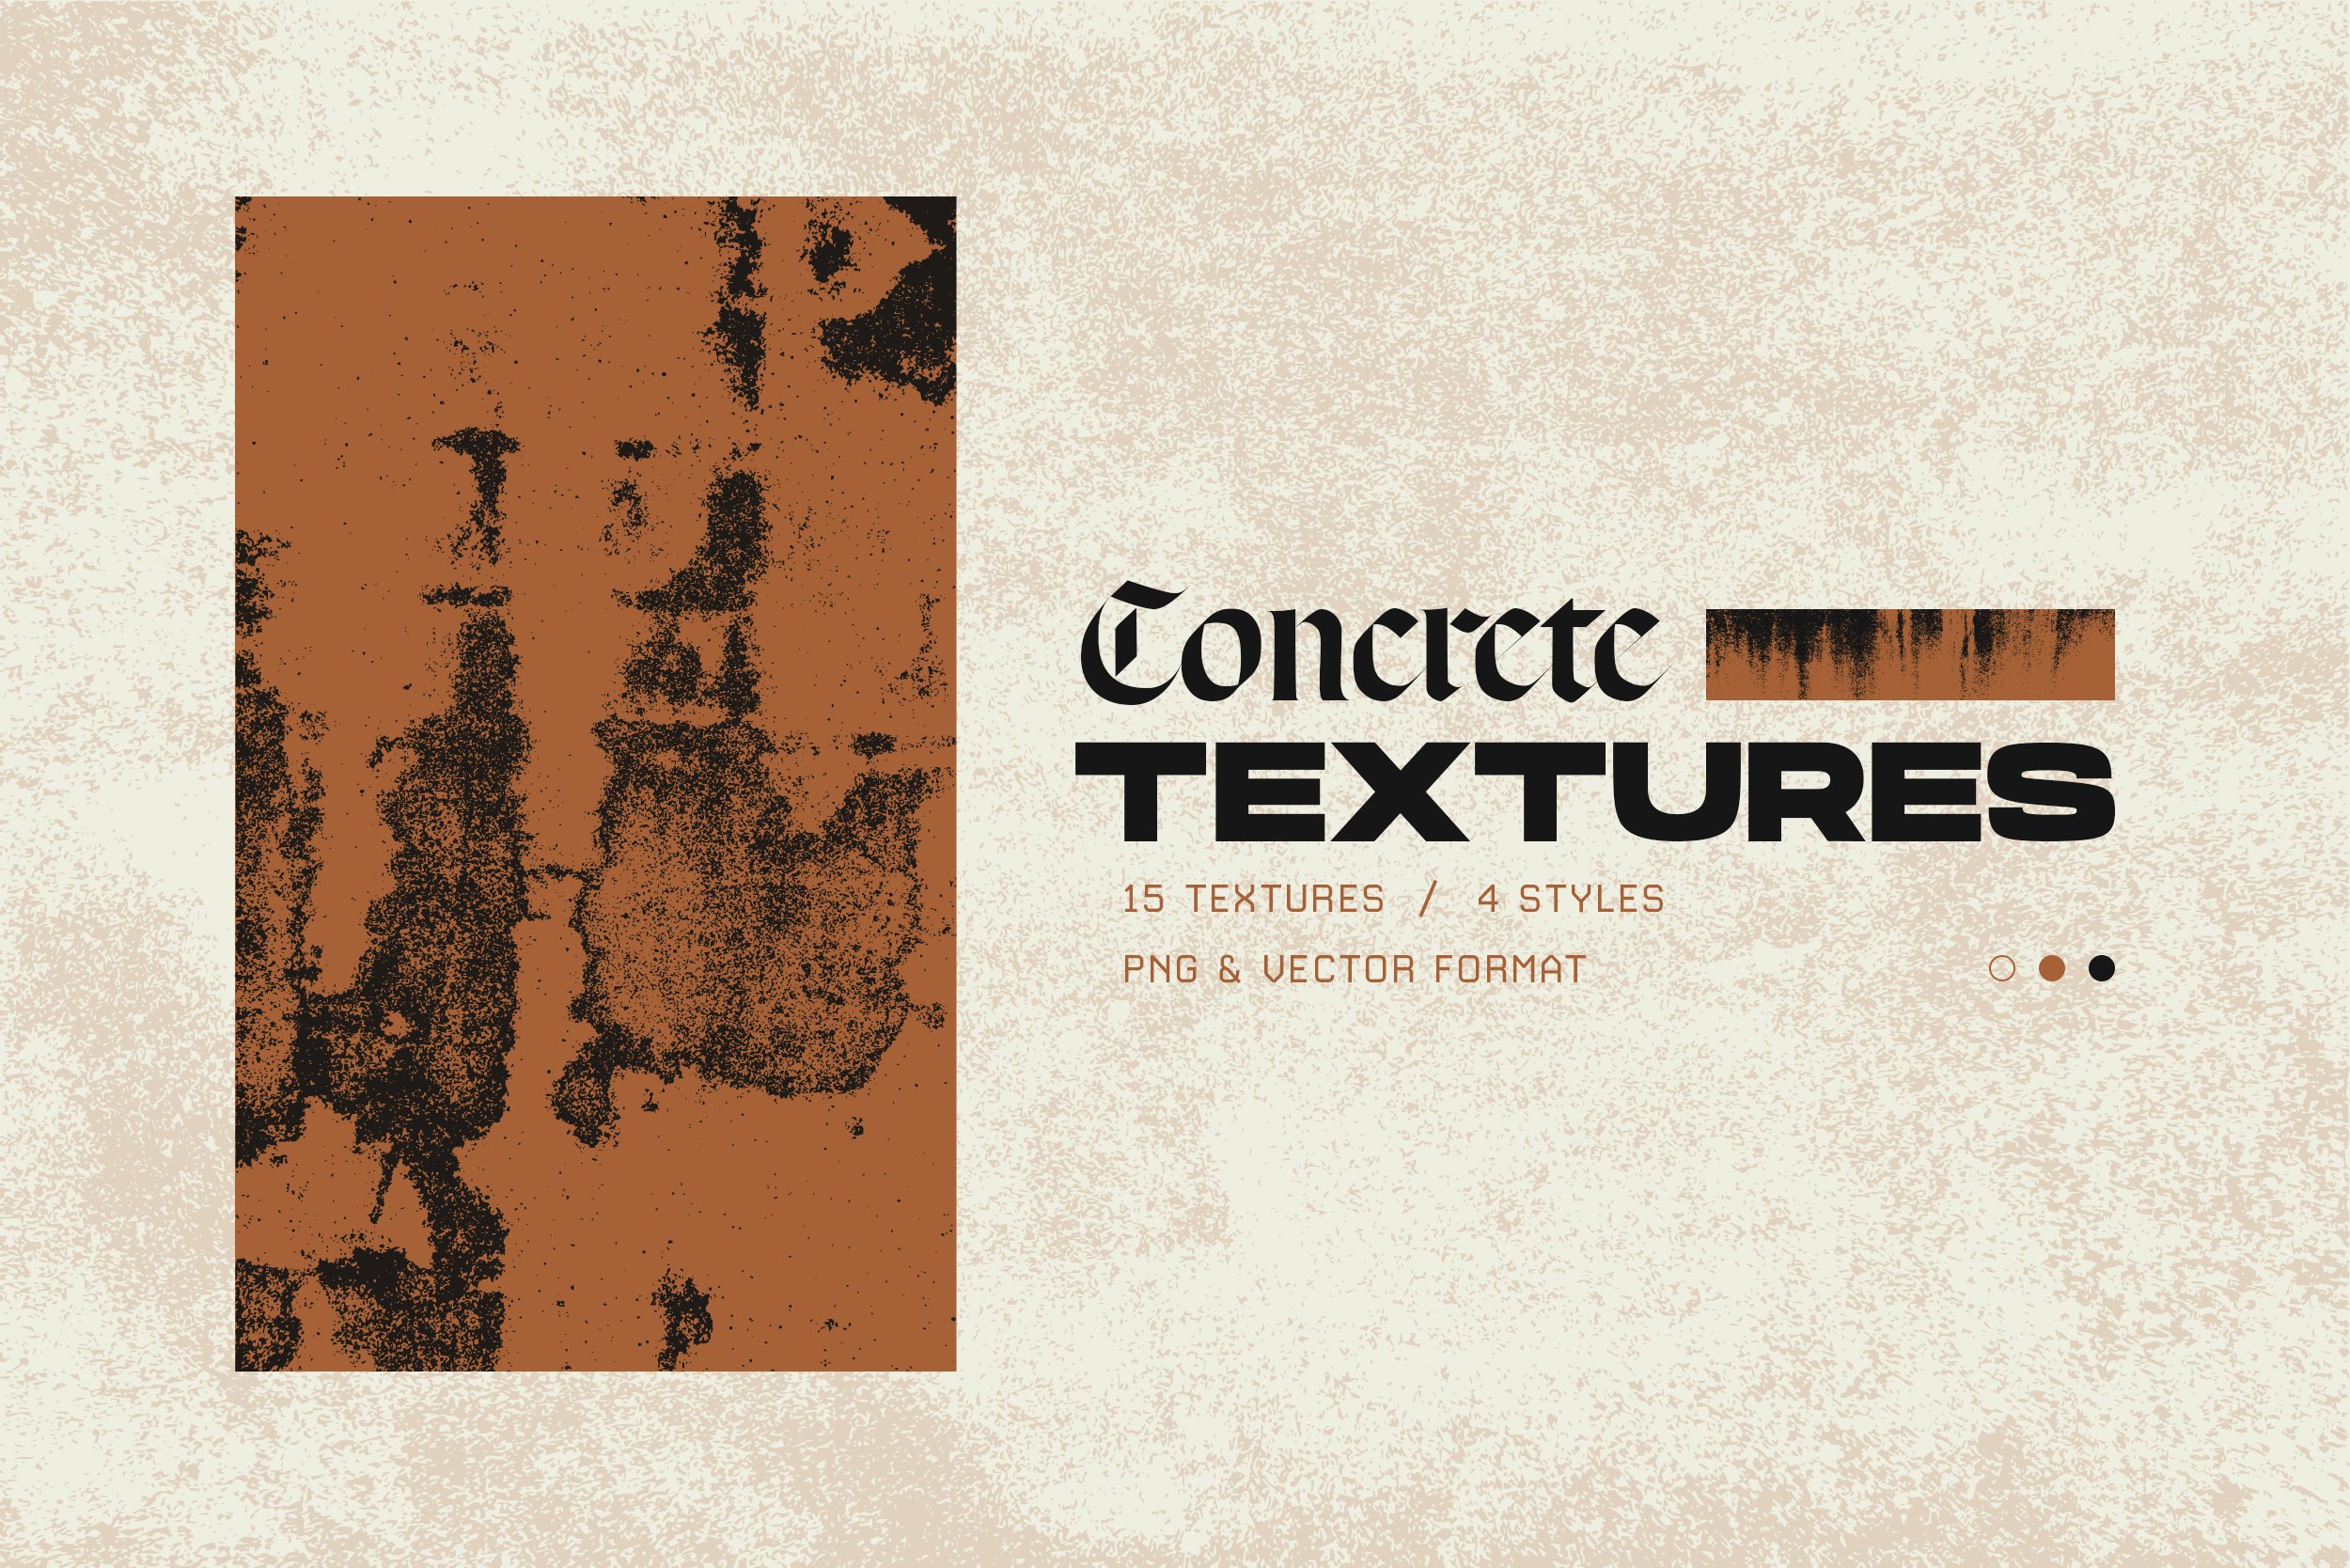 Concrete Textures cover image.